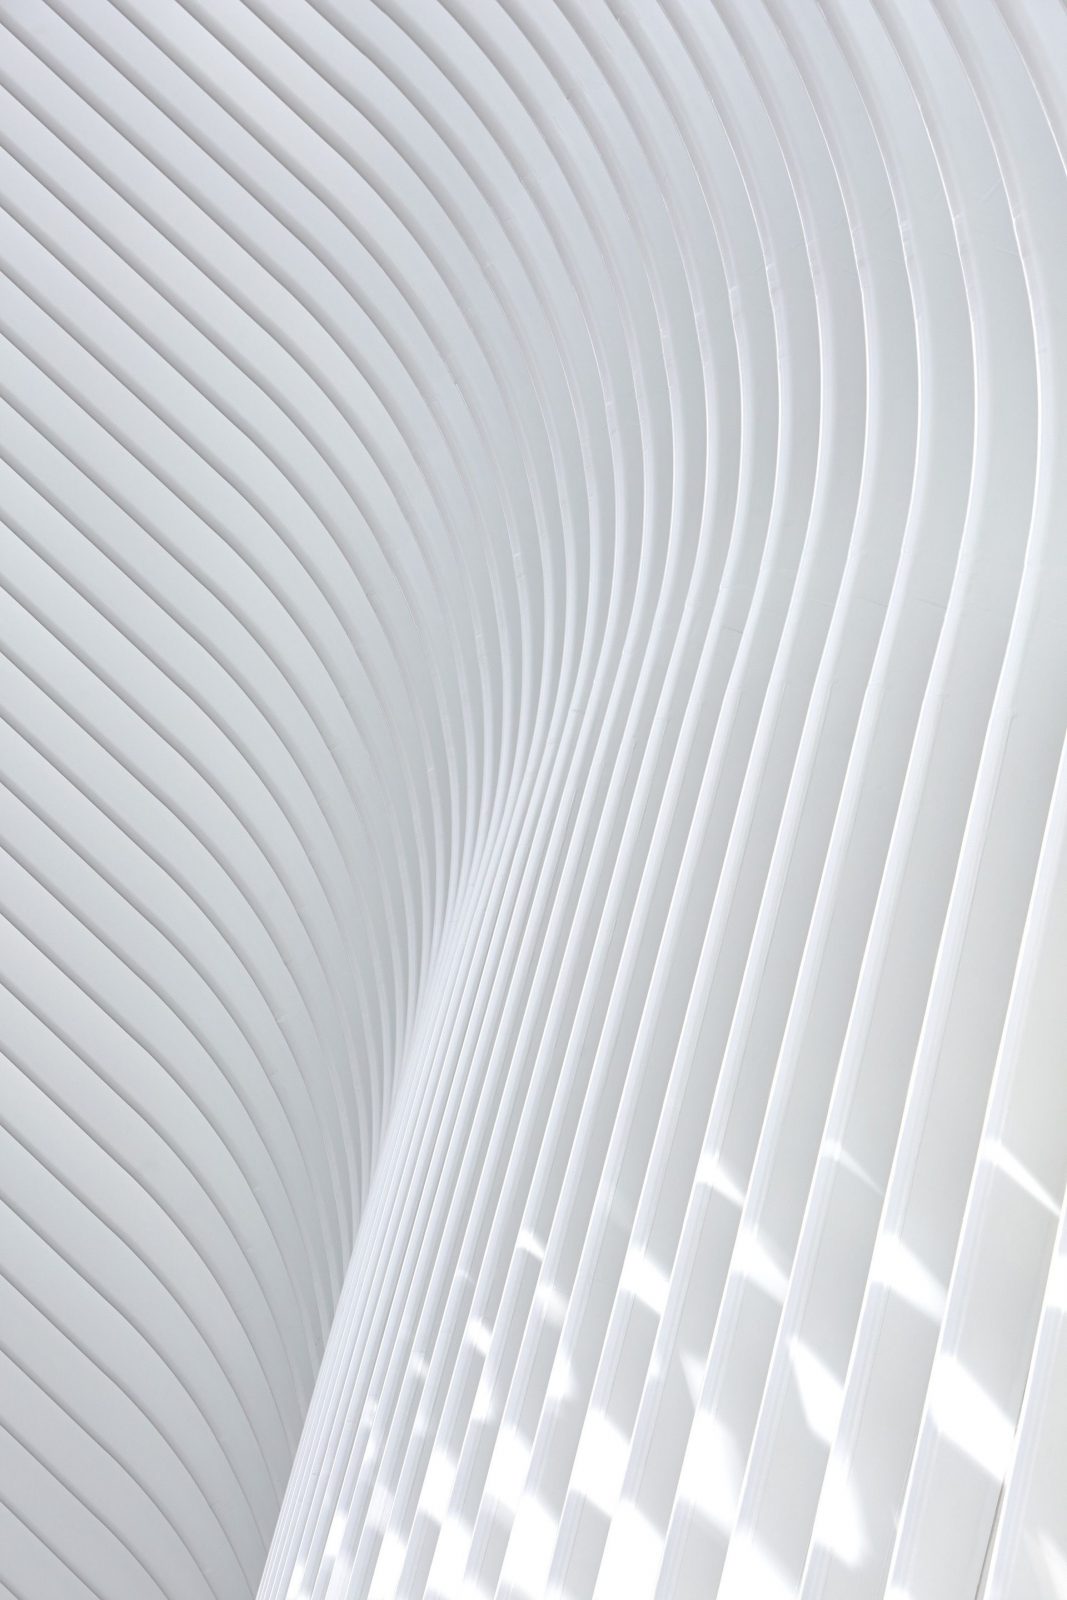 'Oculus NYC' World Trade Center Transportation Hub | Santiago Calatrava ...